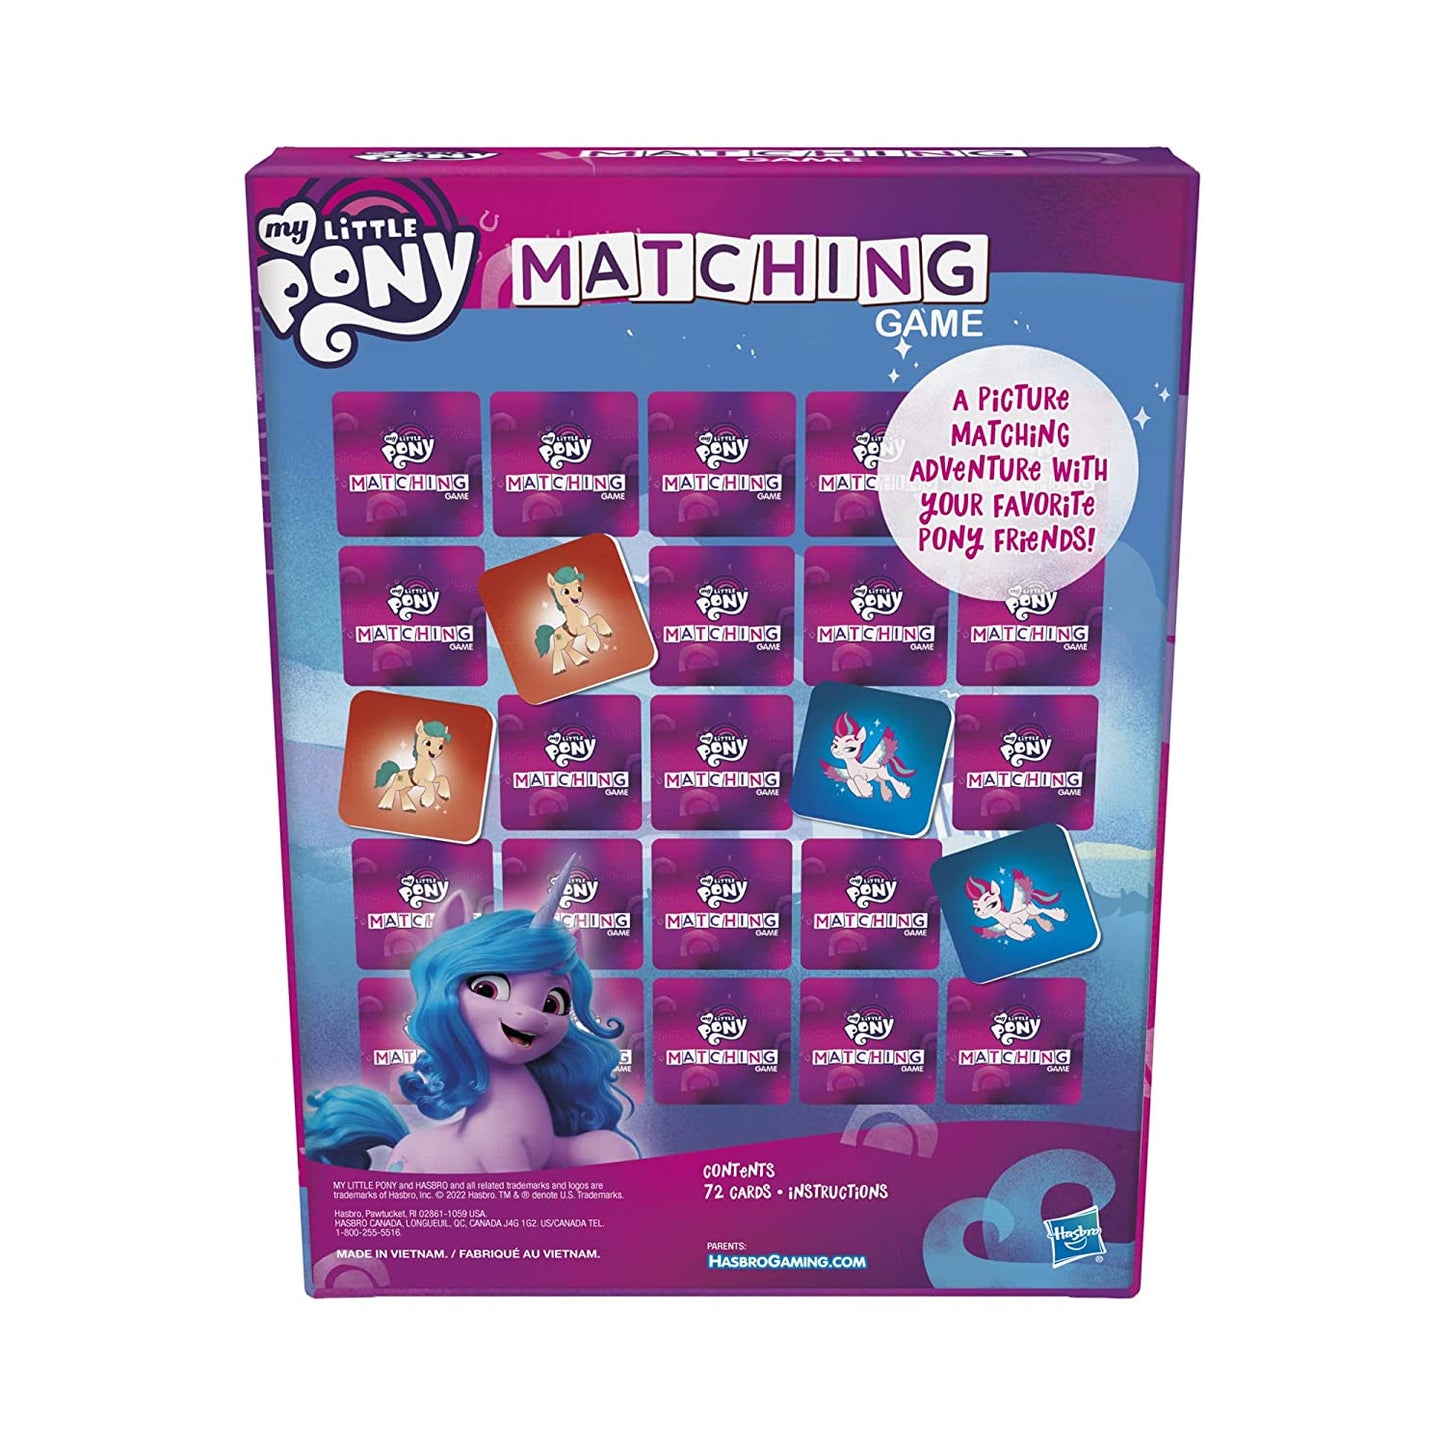 Pony Matching Game